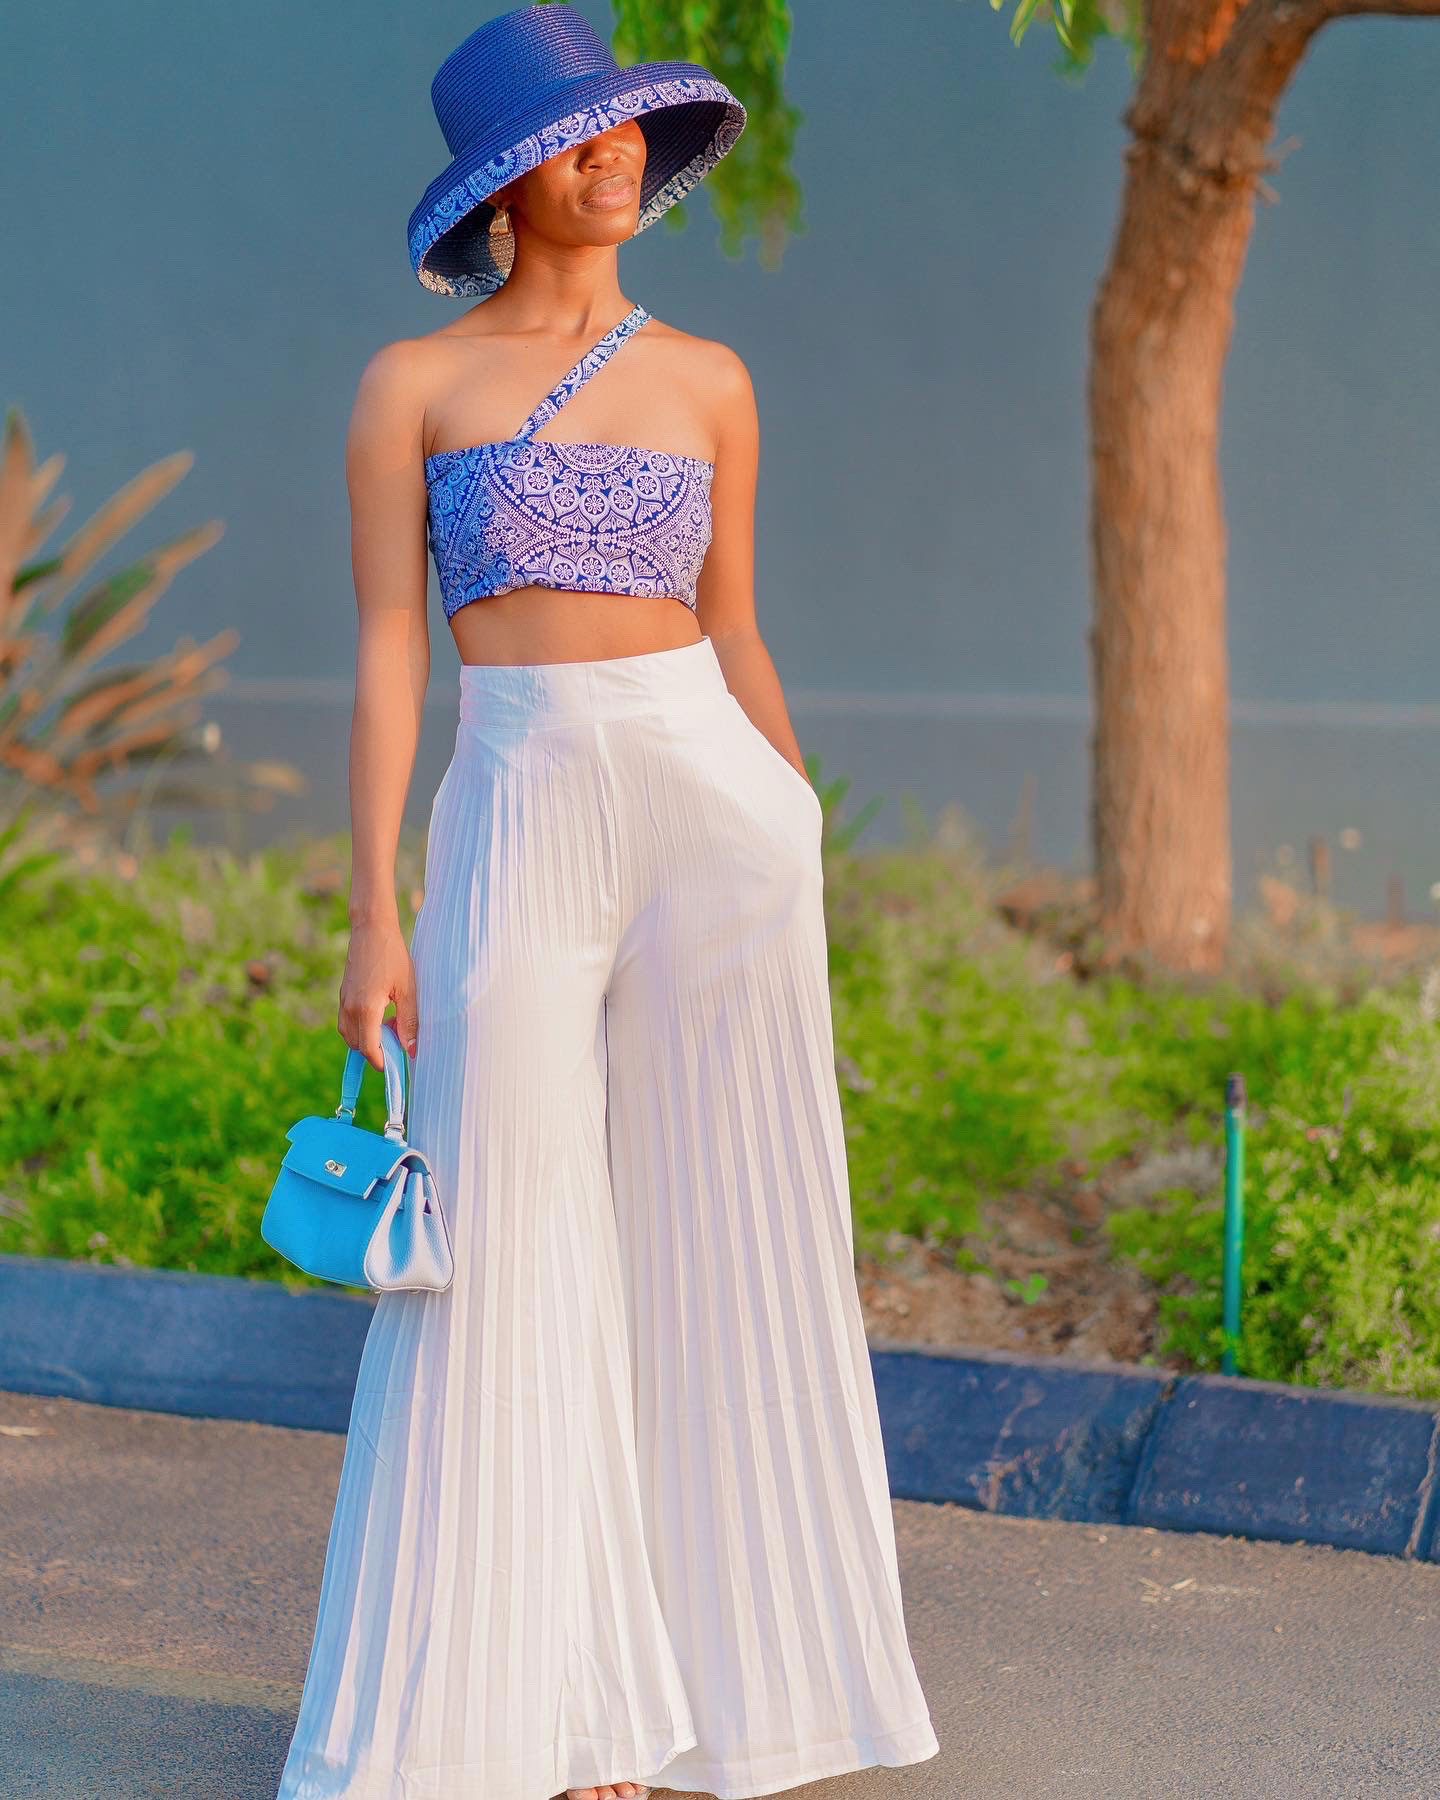 Best dressed of the week : Mpho “Gigi” Tshwaane 